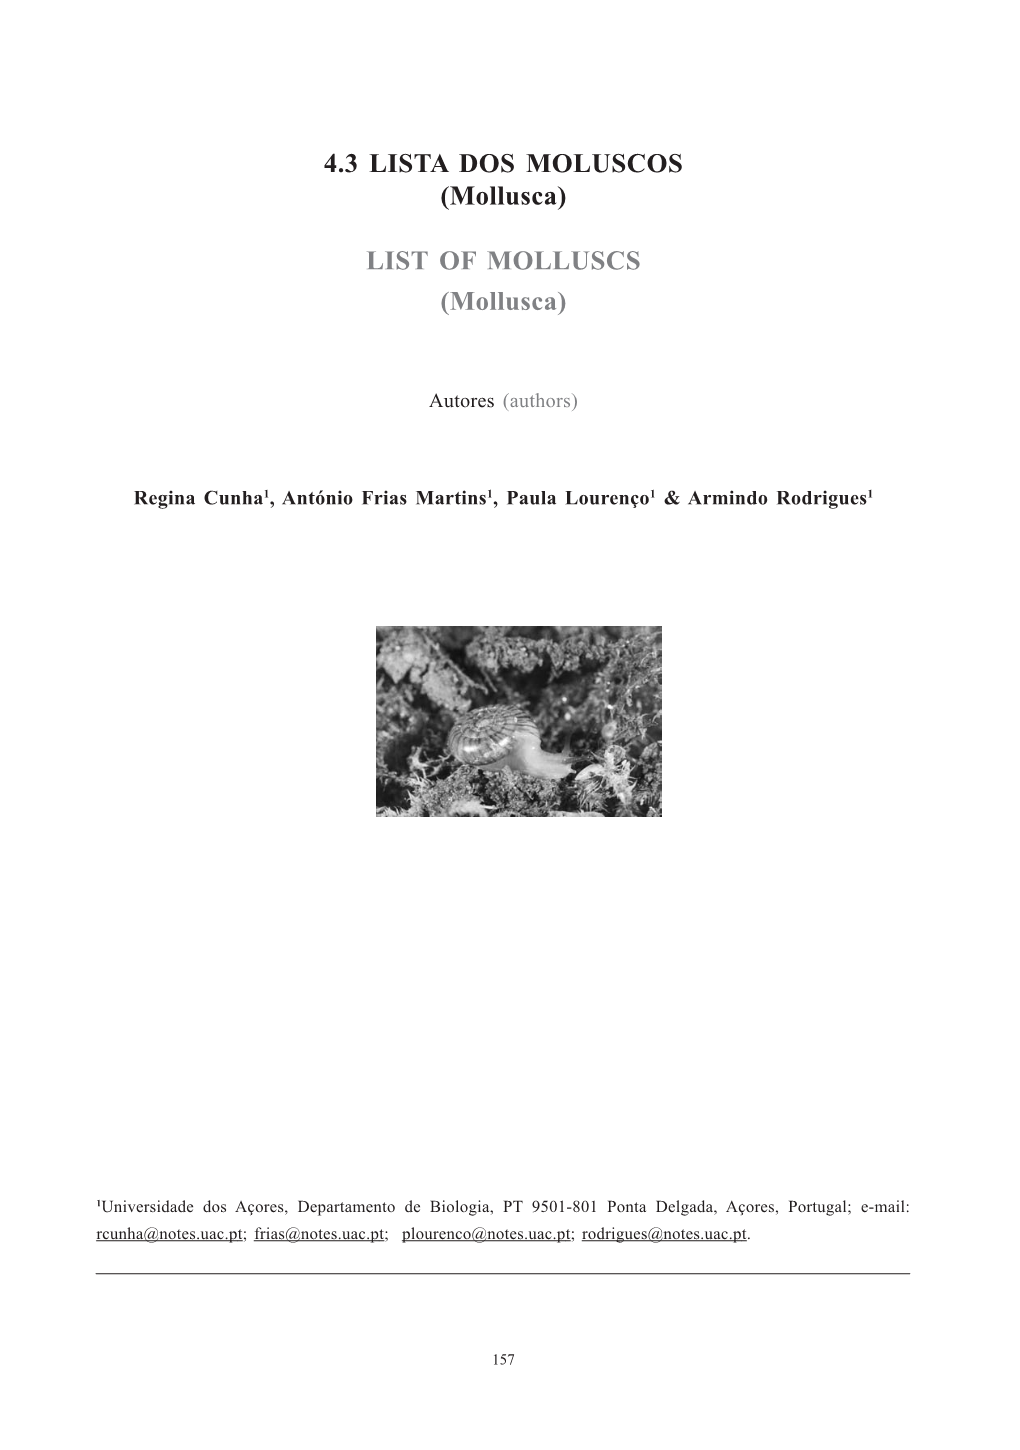 4.3 LISTA DOS MOLUSCOS (Mollusca) LIST of MOLLUSCS